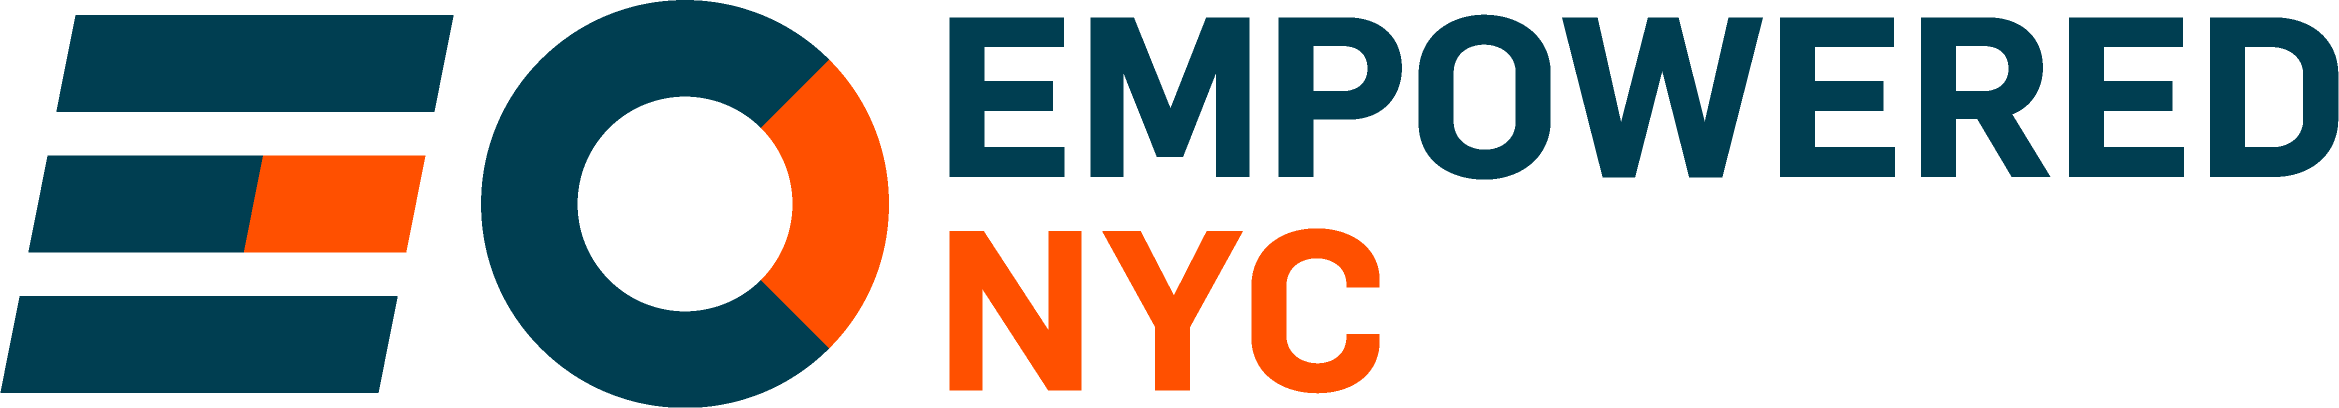 Empowered NYC Logo